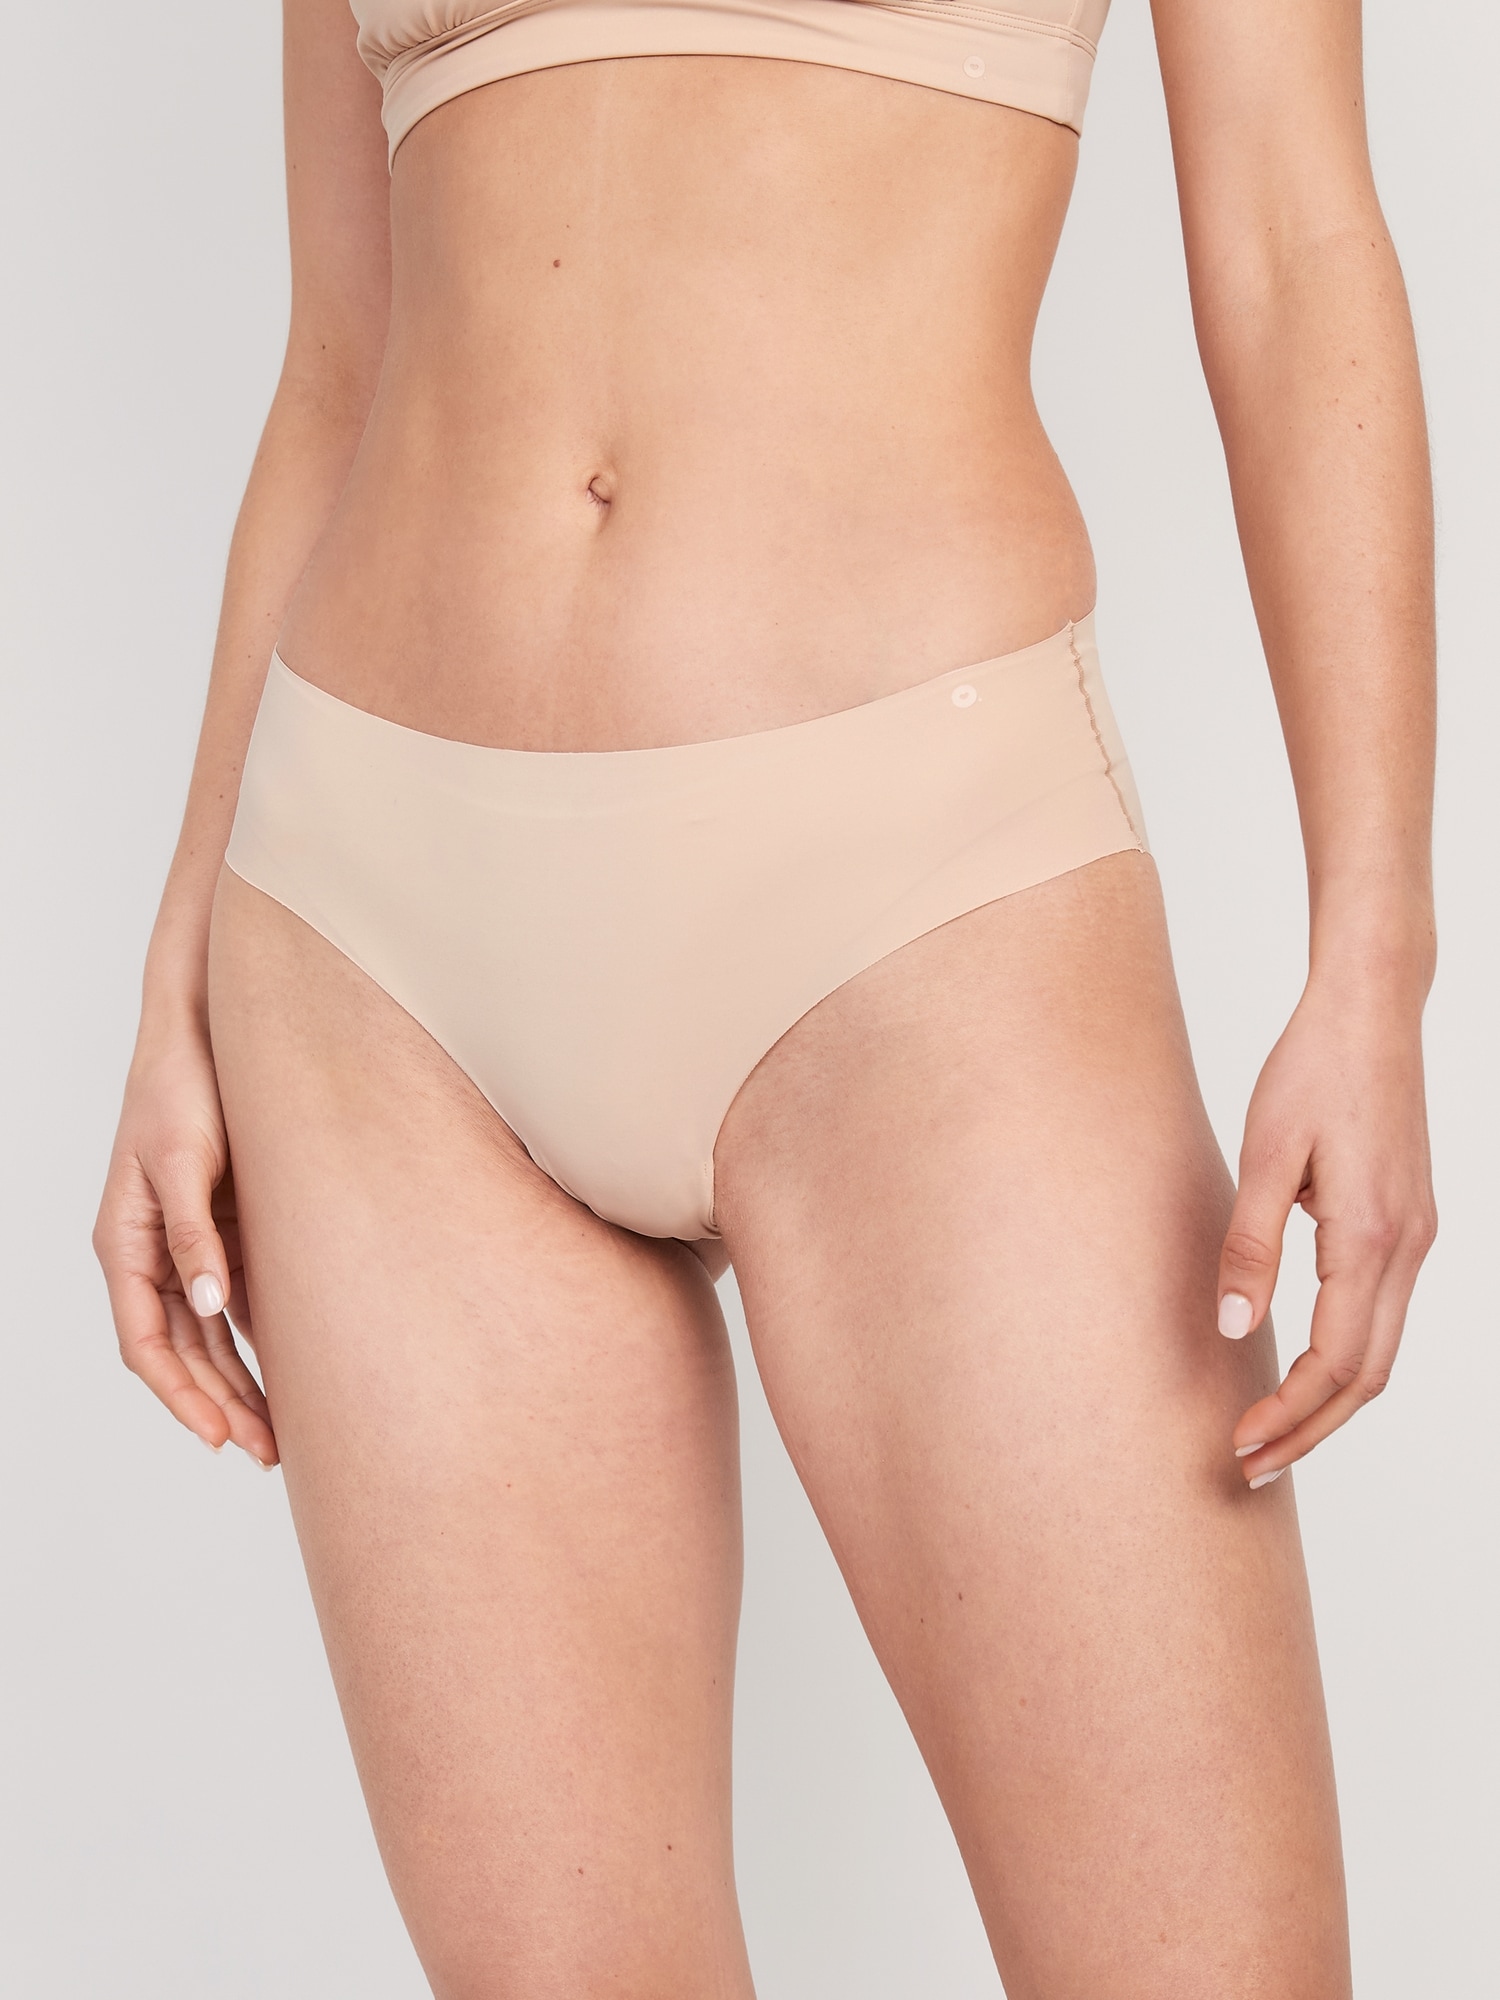 Gap Body Panties Bikini Hipster Shorty Thong Girl Short - Soft Cotton or  Lace